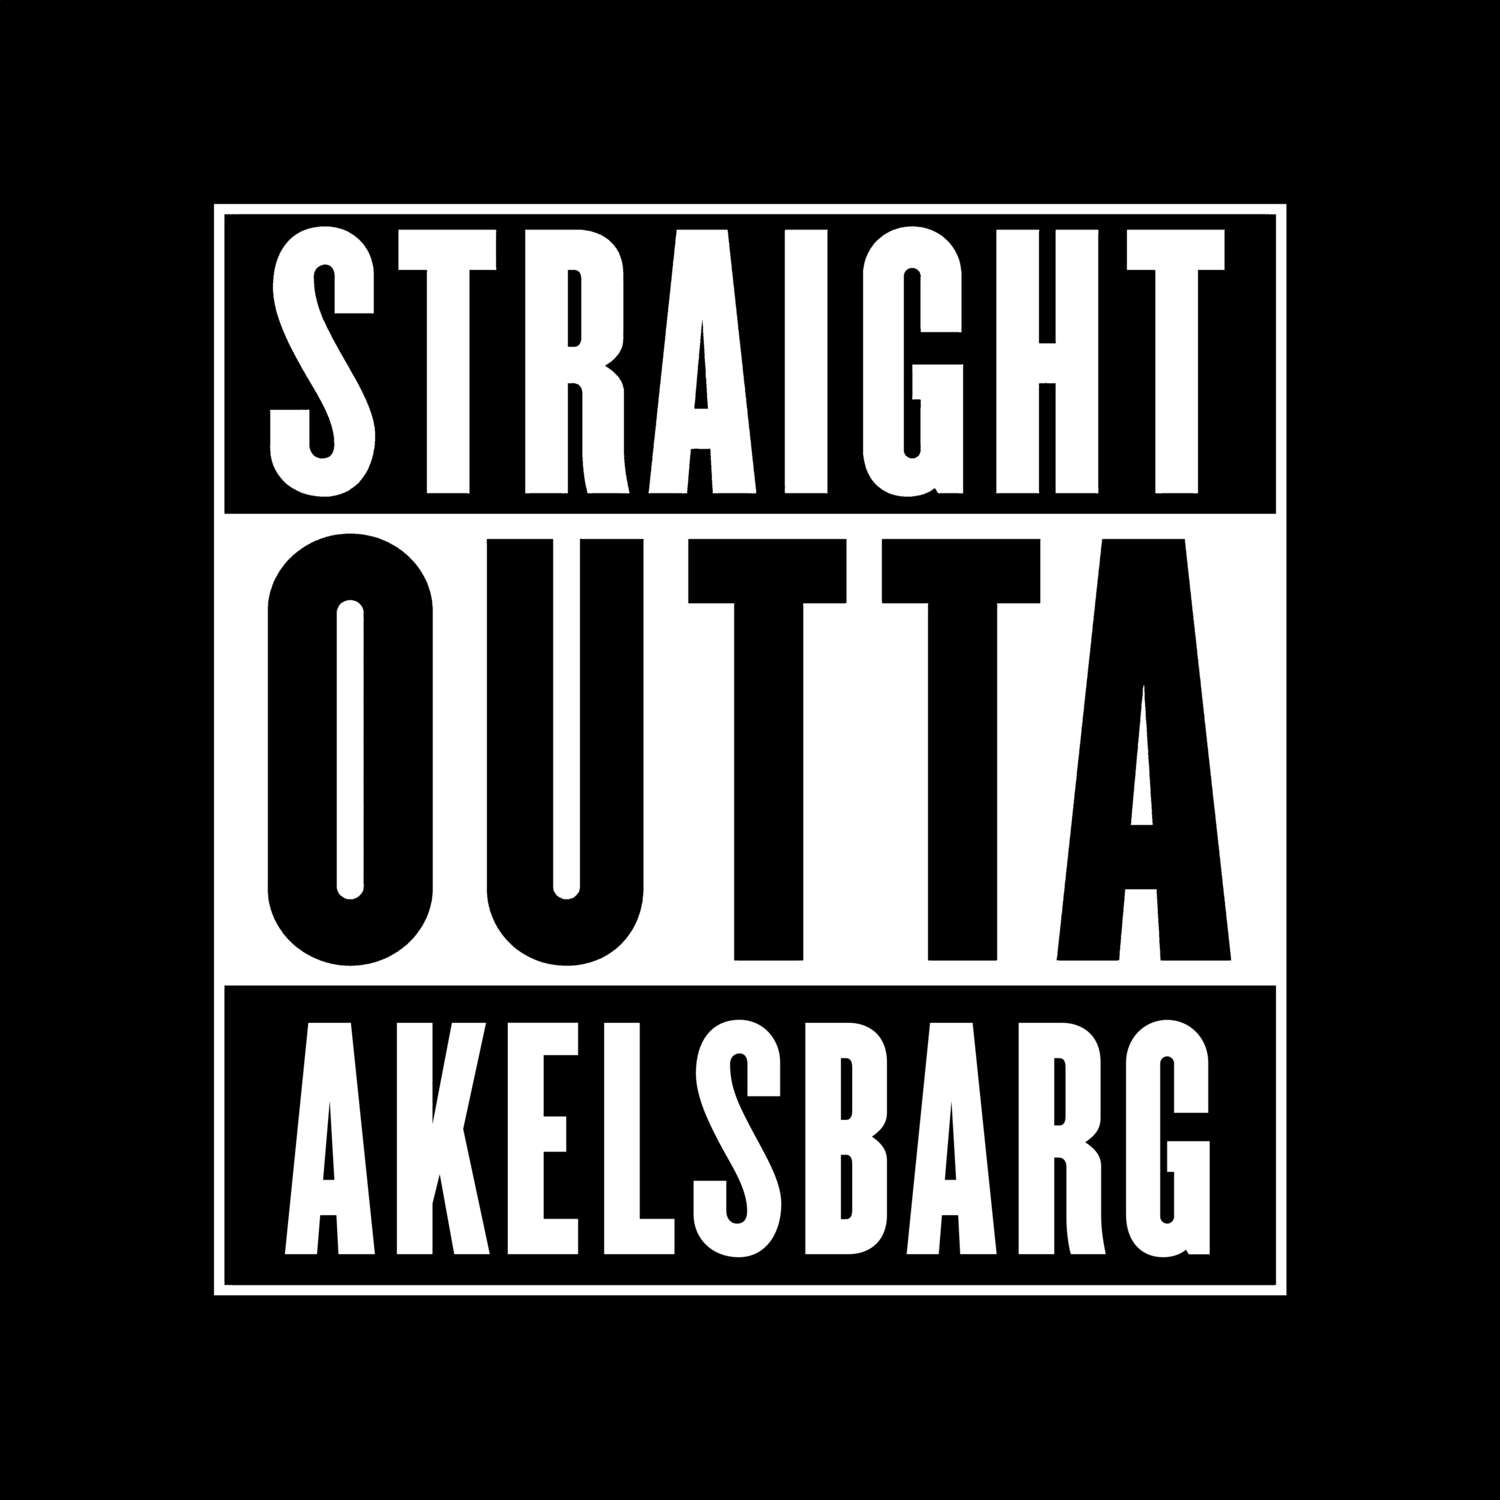 Akelsbarg T-Shirt »Straight Outta«